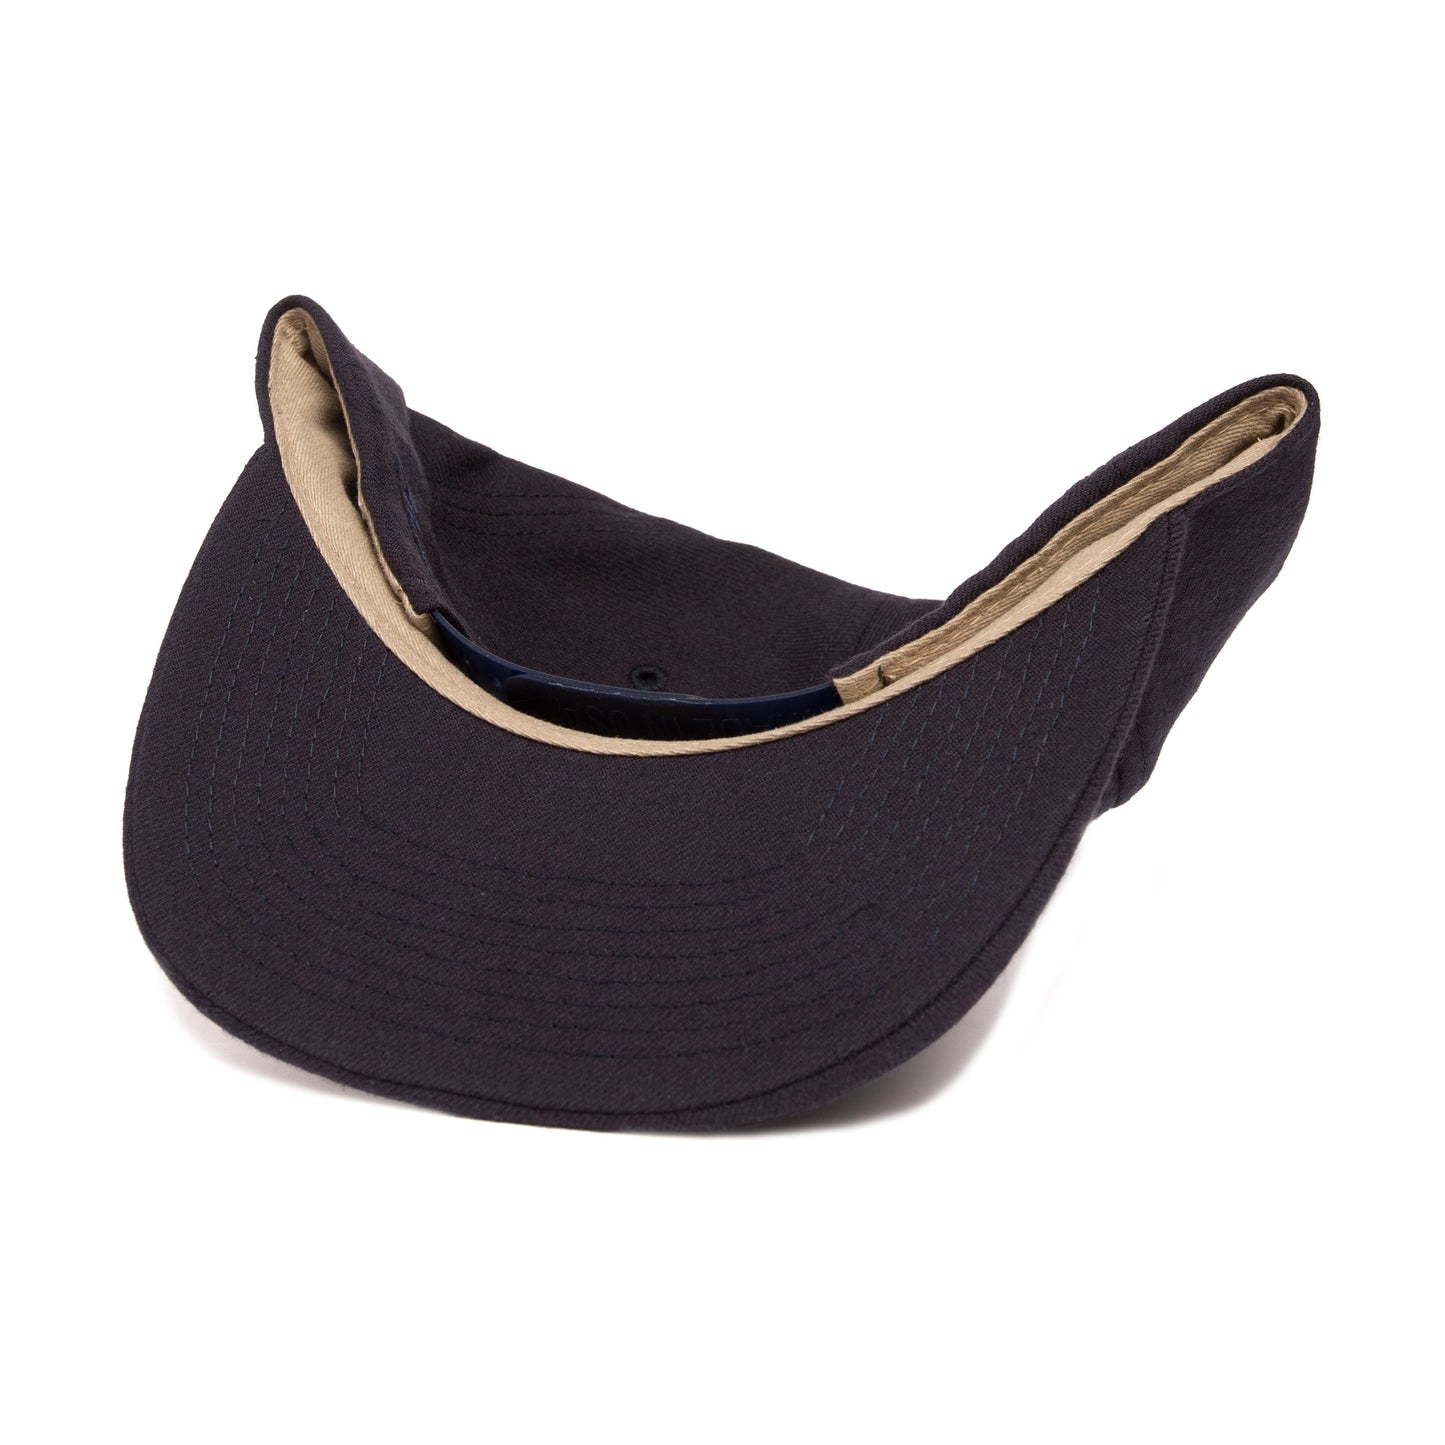 Astoria Snapback Hat